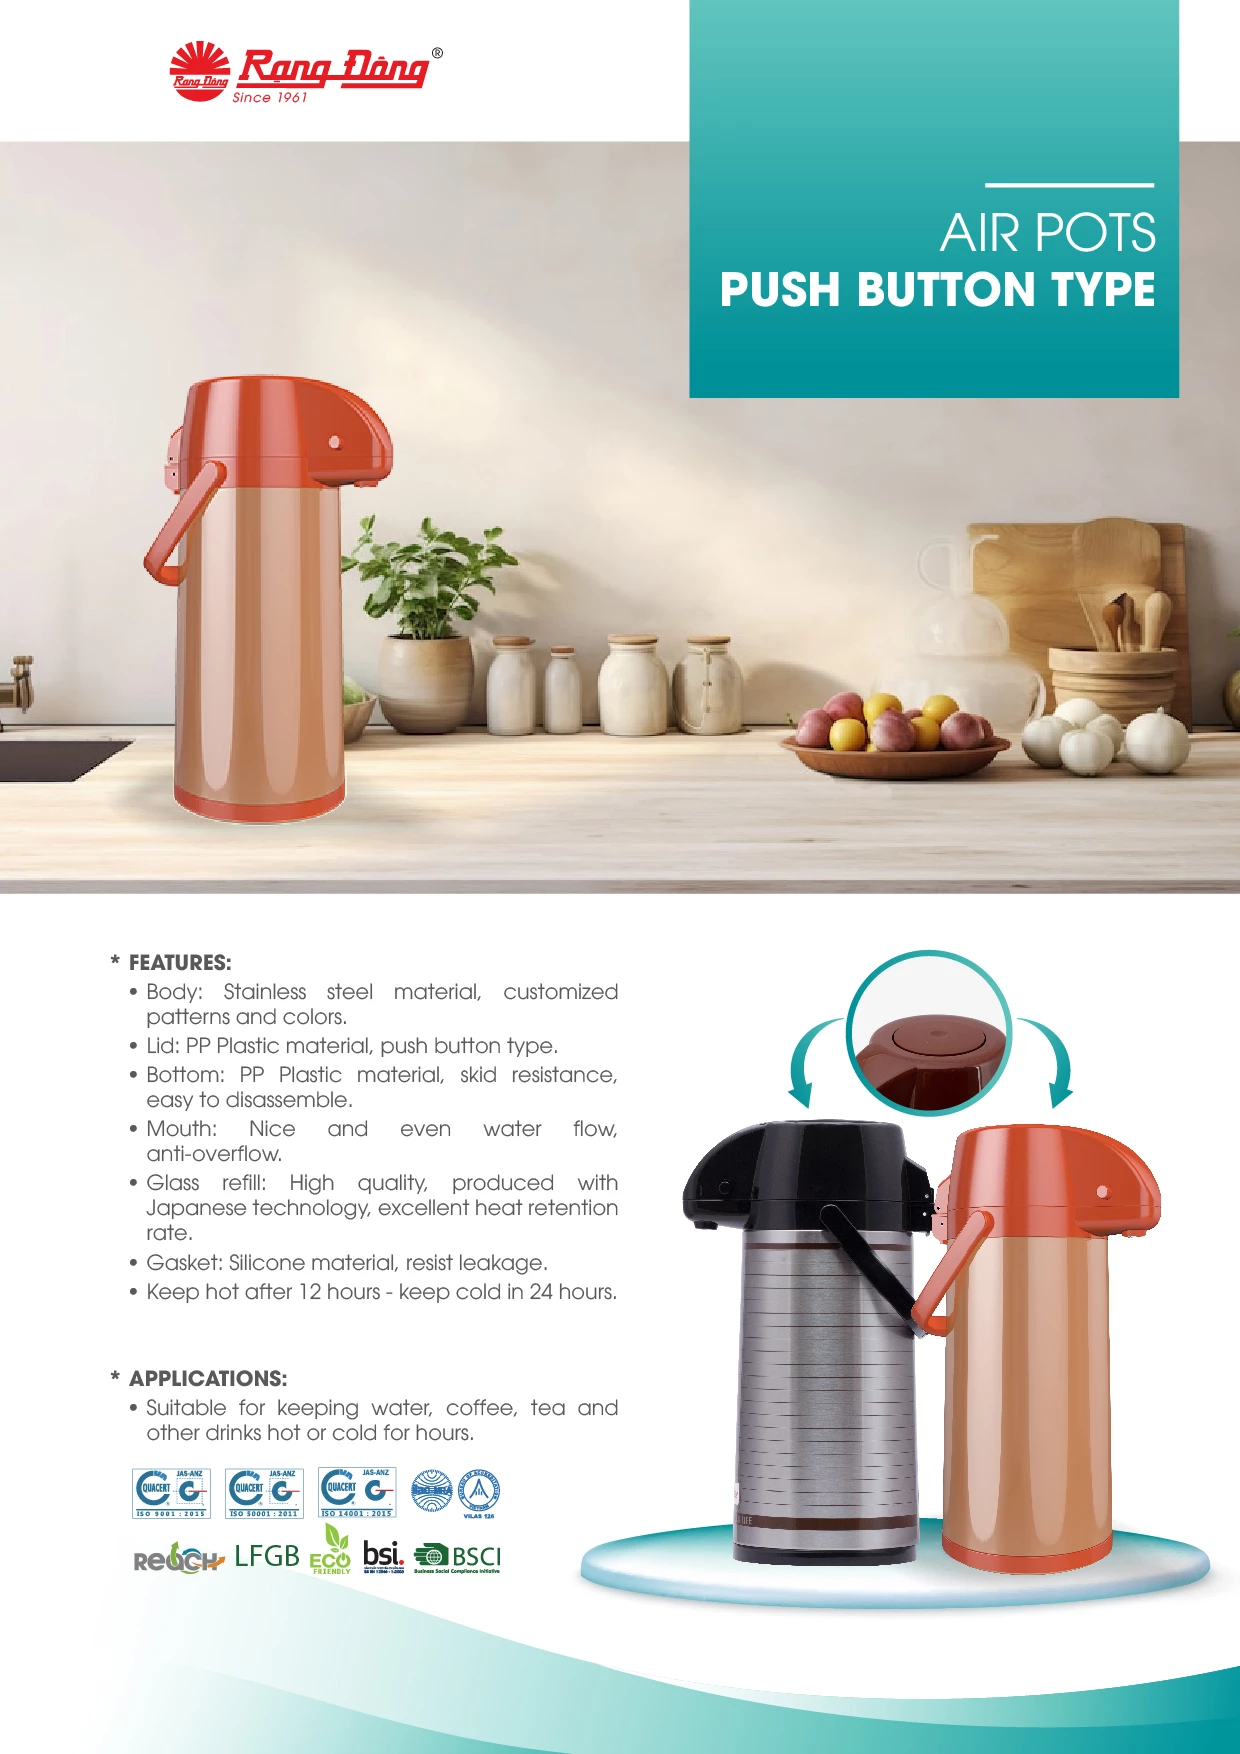 Air Pots Push button type airpot